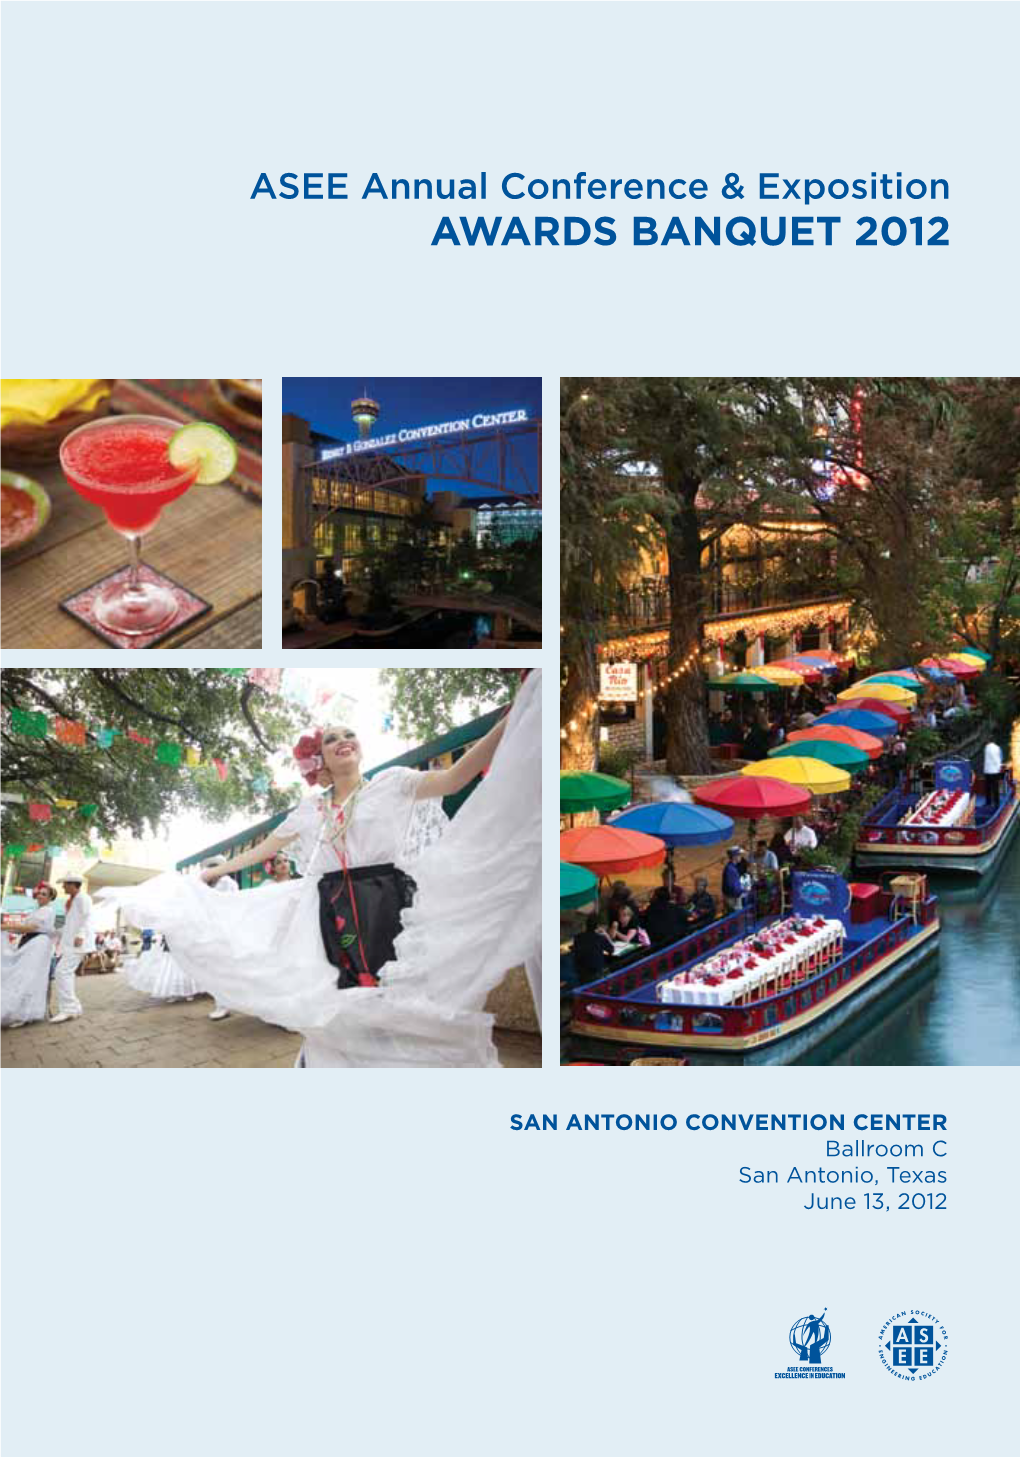 Awards Banquet 2012